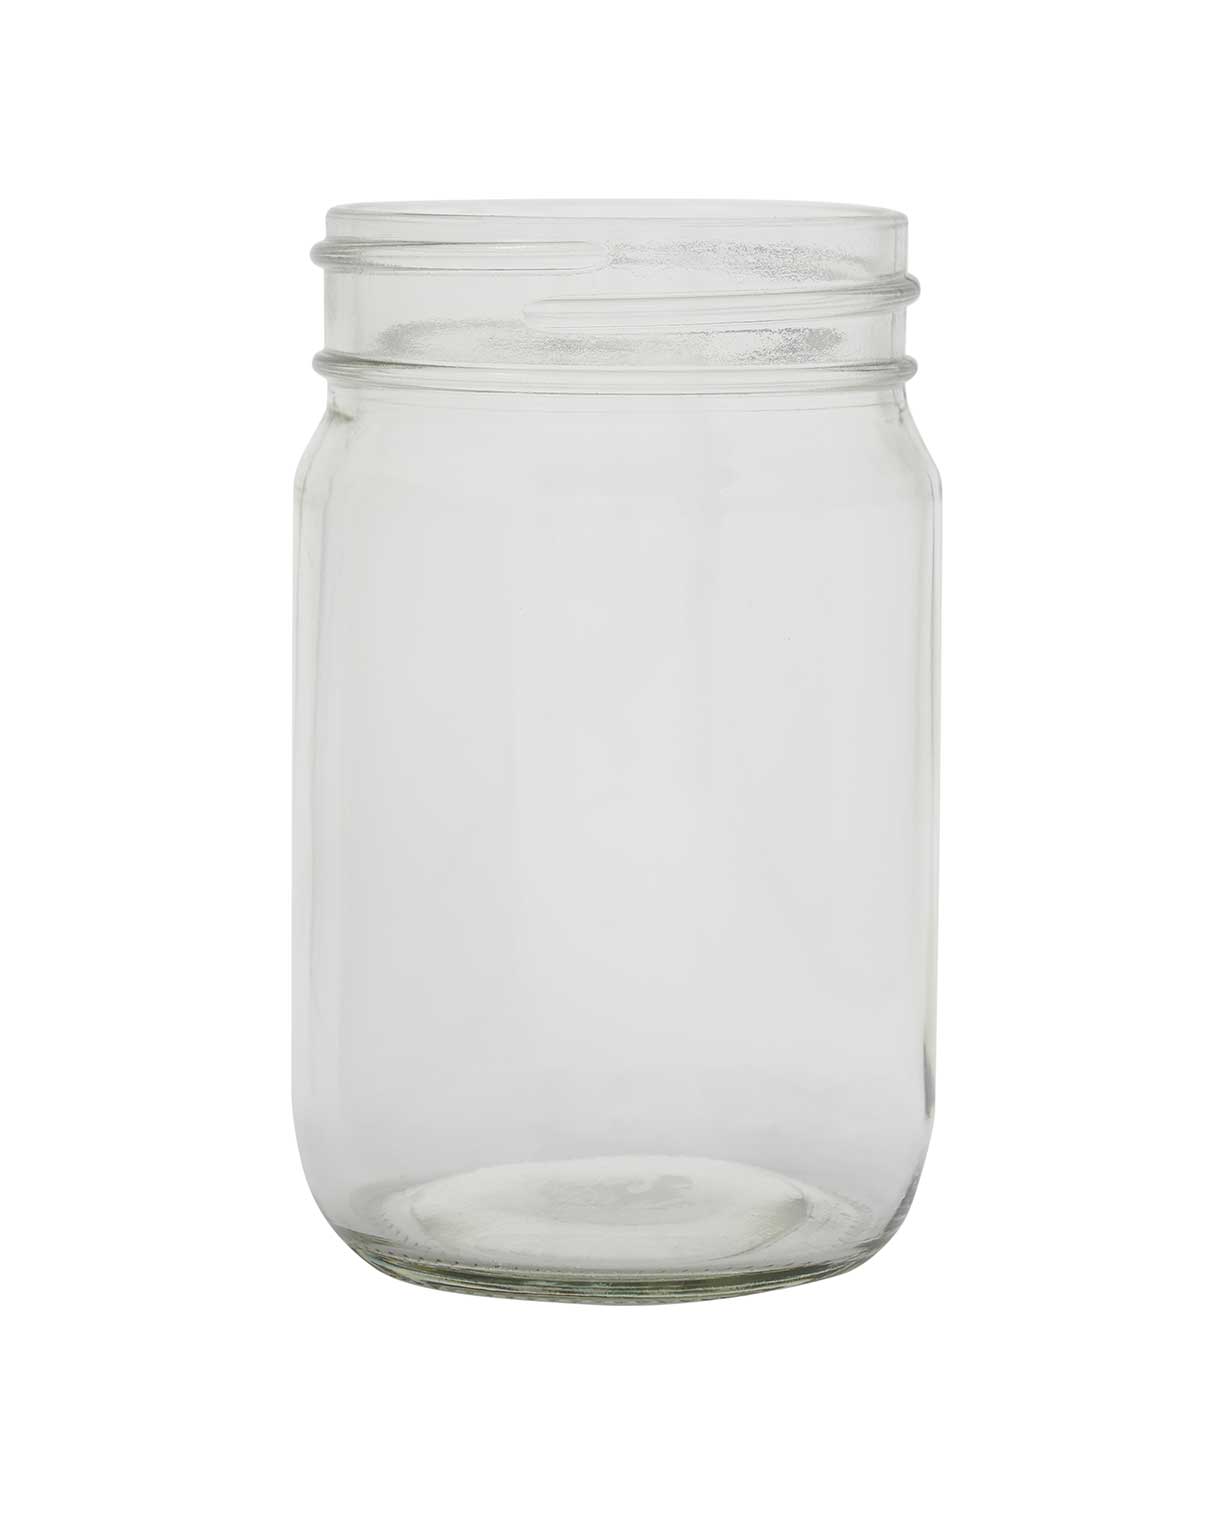 12 oz glass flint mayo jar 70 lug